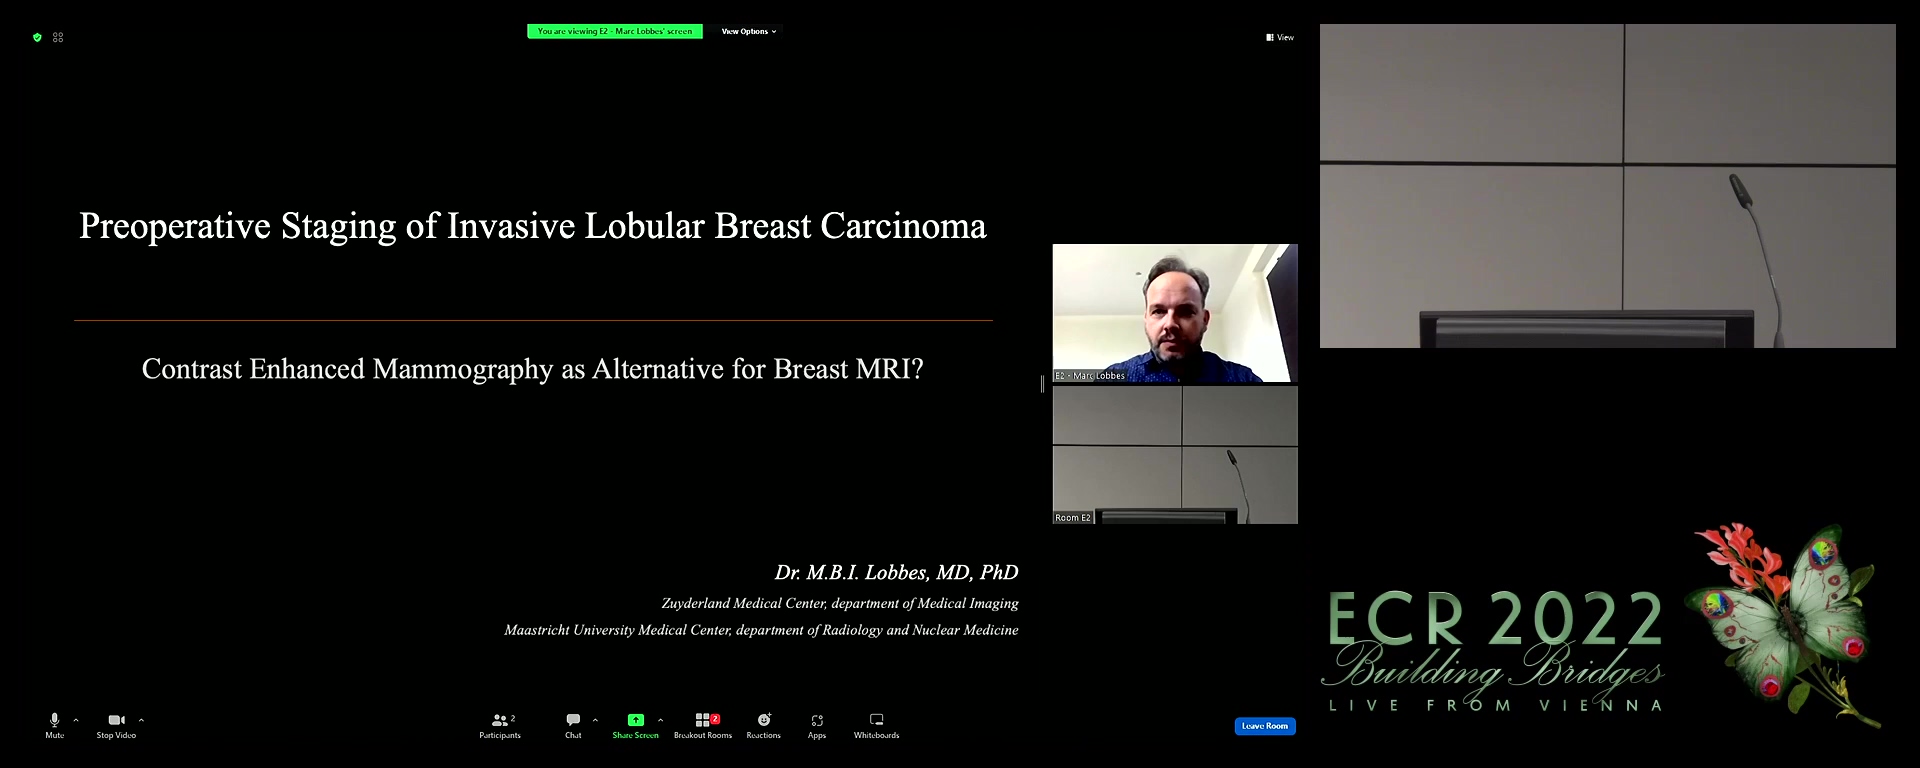 Preoperative staging of invasive lobular carcinoma (ILC): contrast-enhanced mammography (CEM) as alternative for breast MRI?